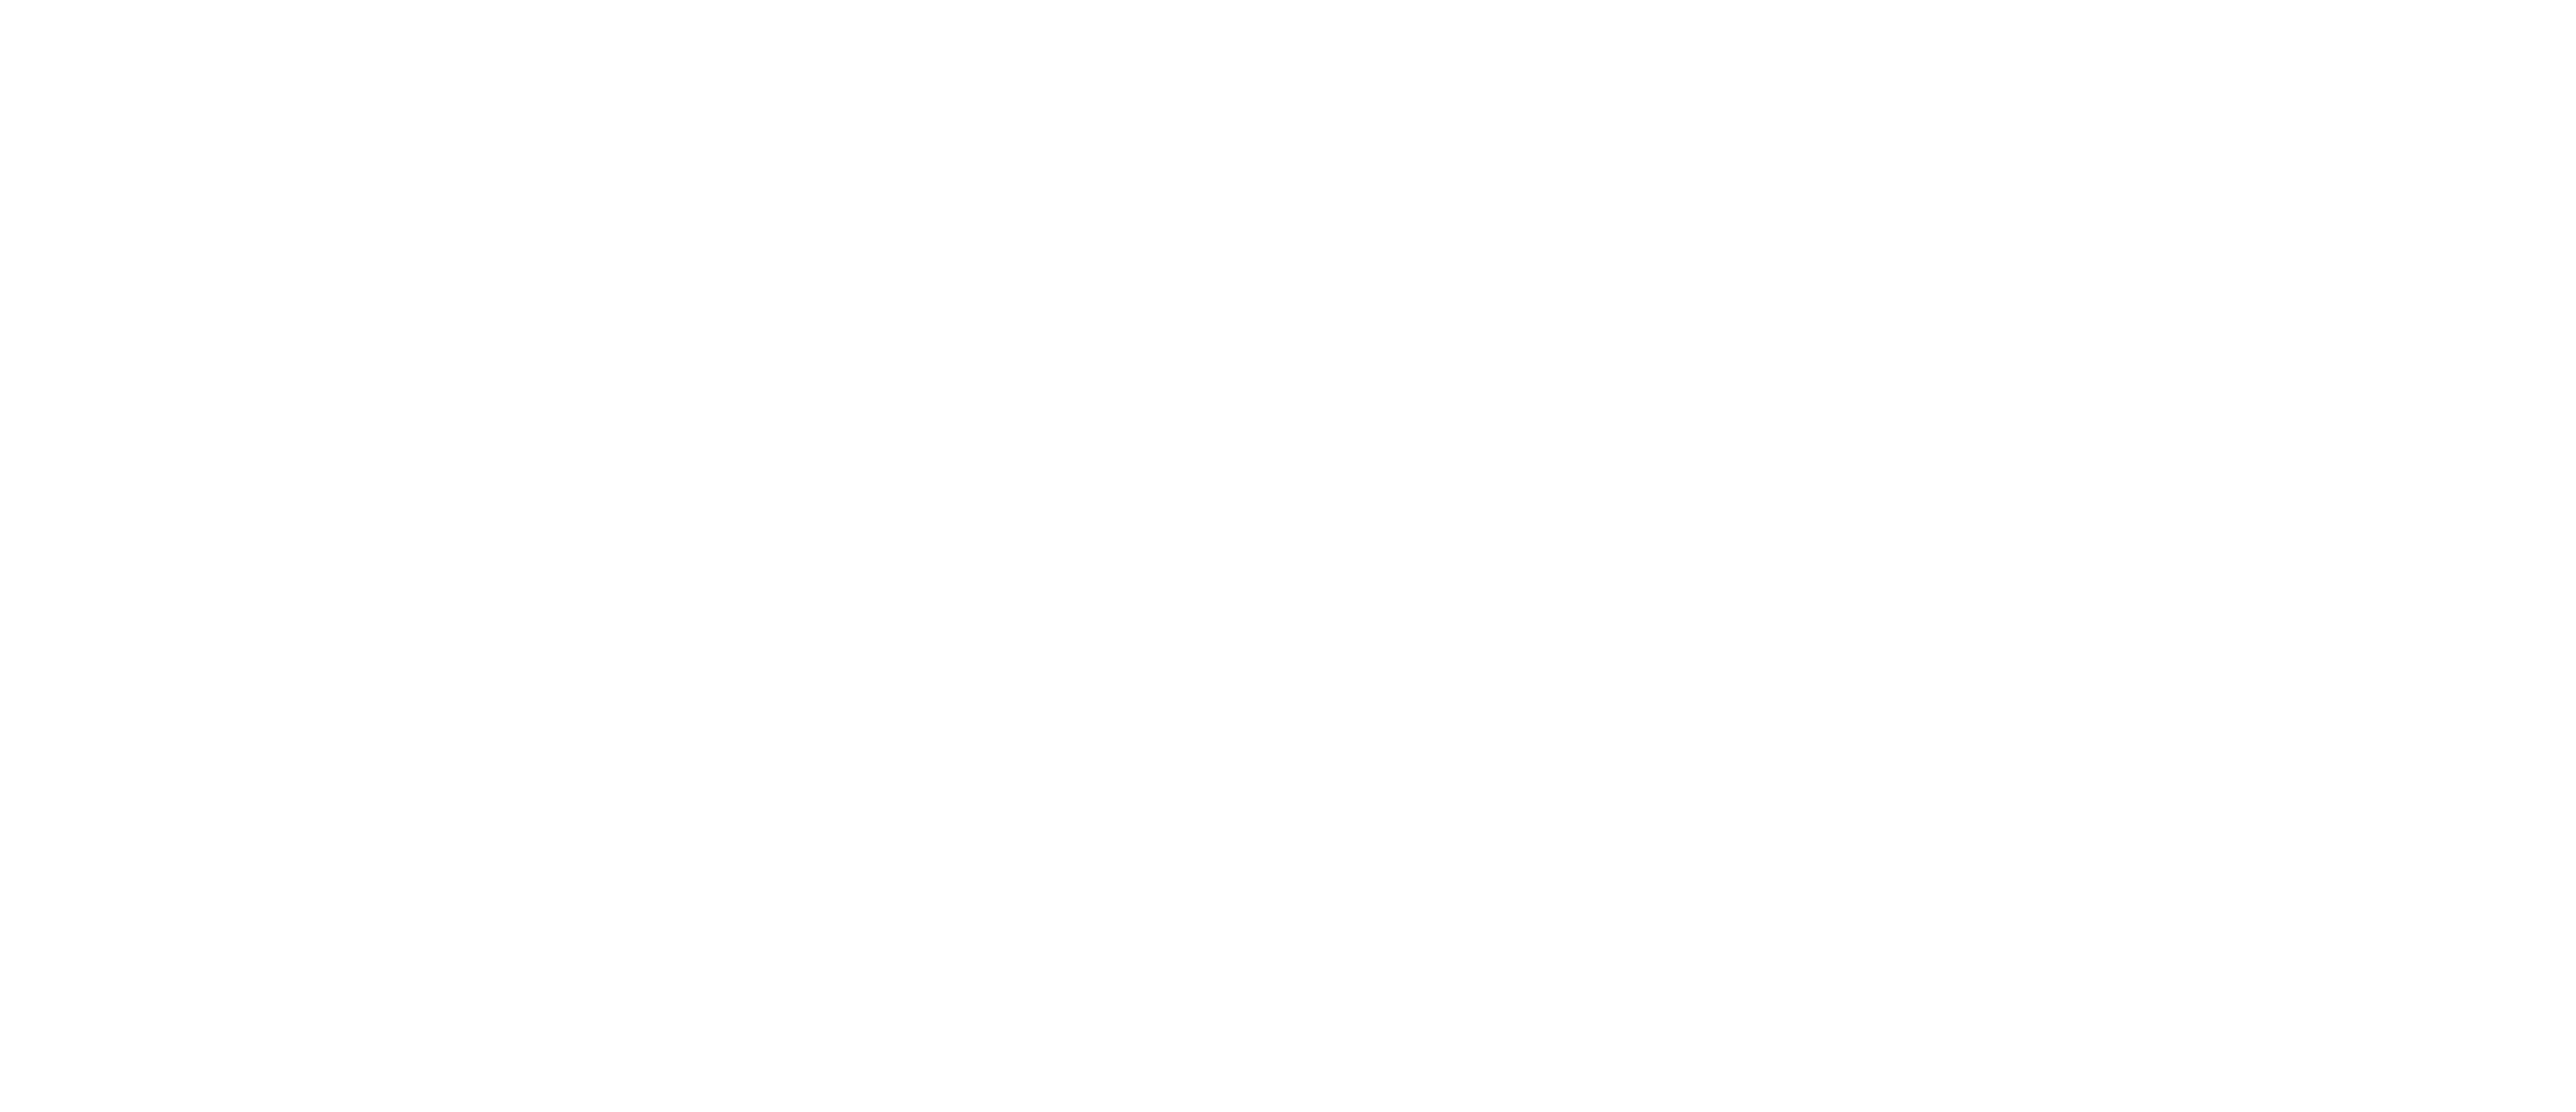 Humane Society For Animals Inc.